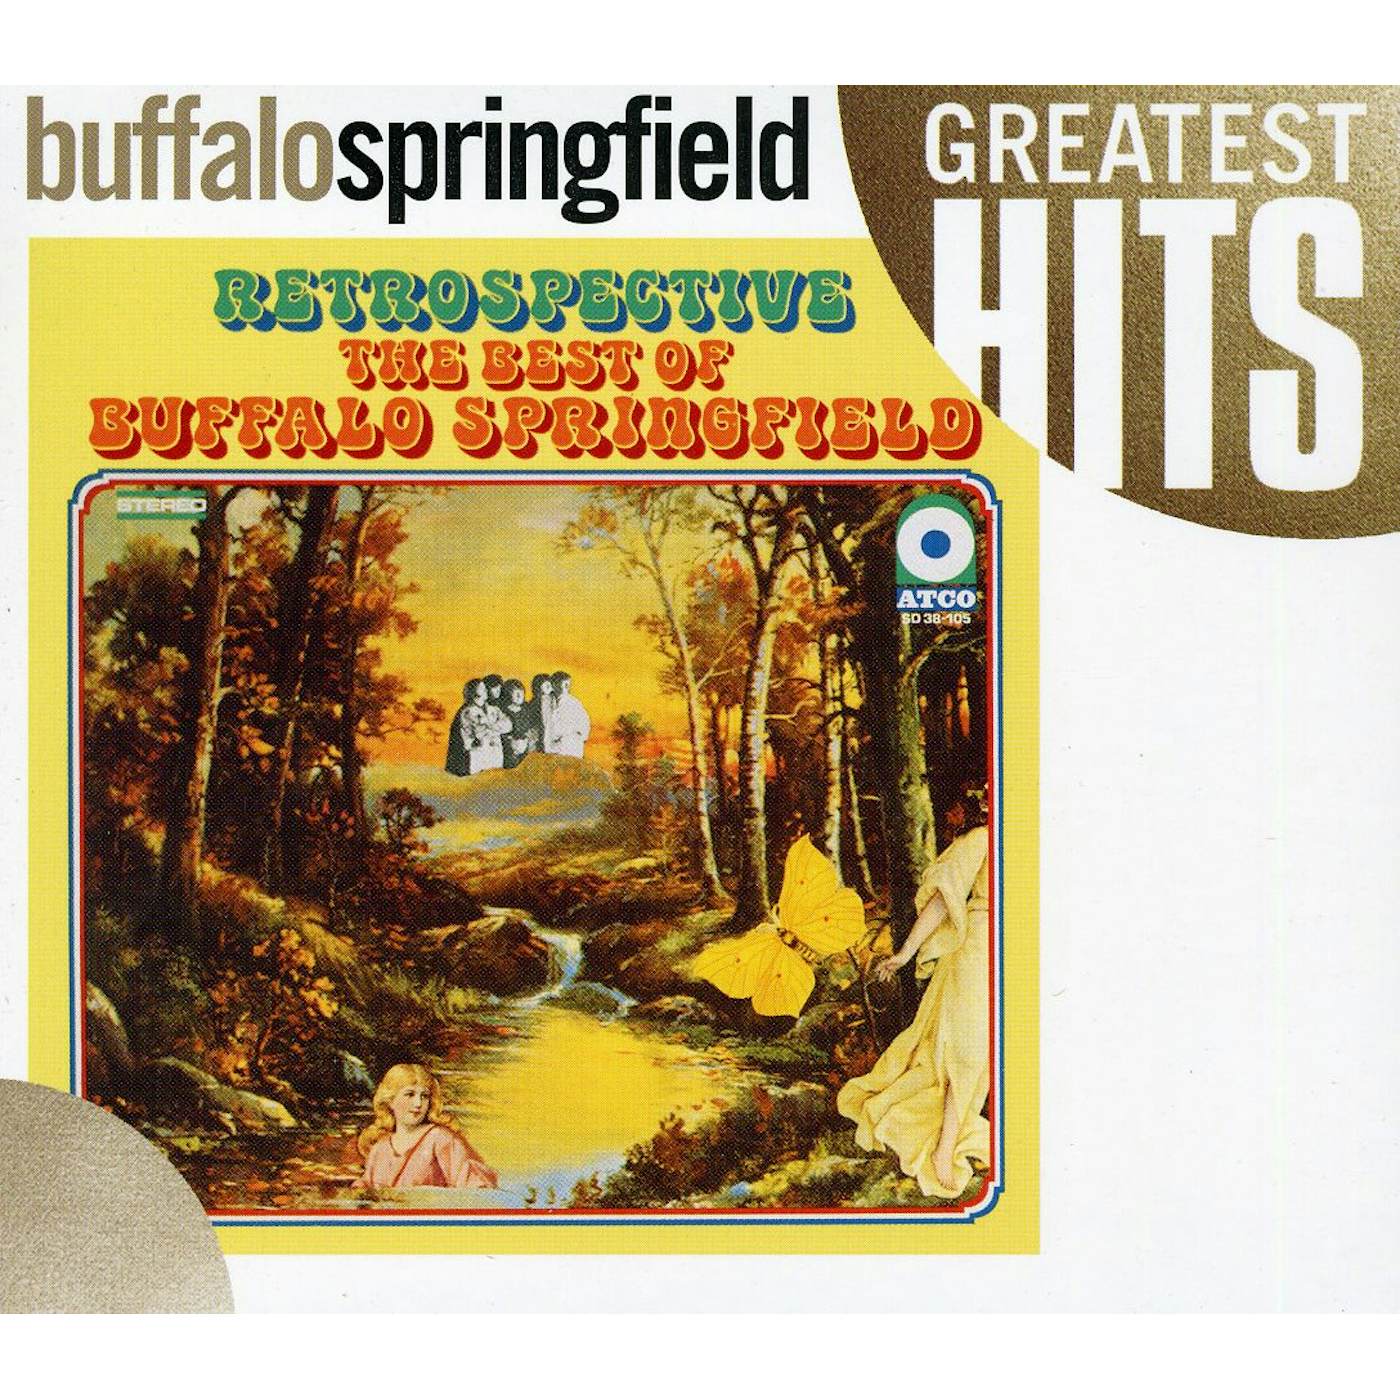 Buffalo Springfield RETROSPECTIVE CD